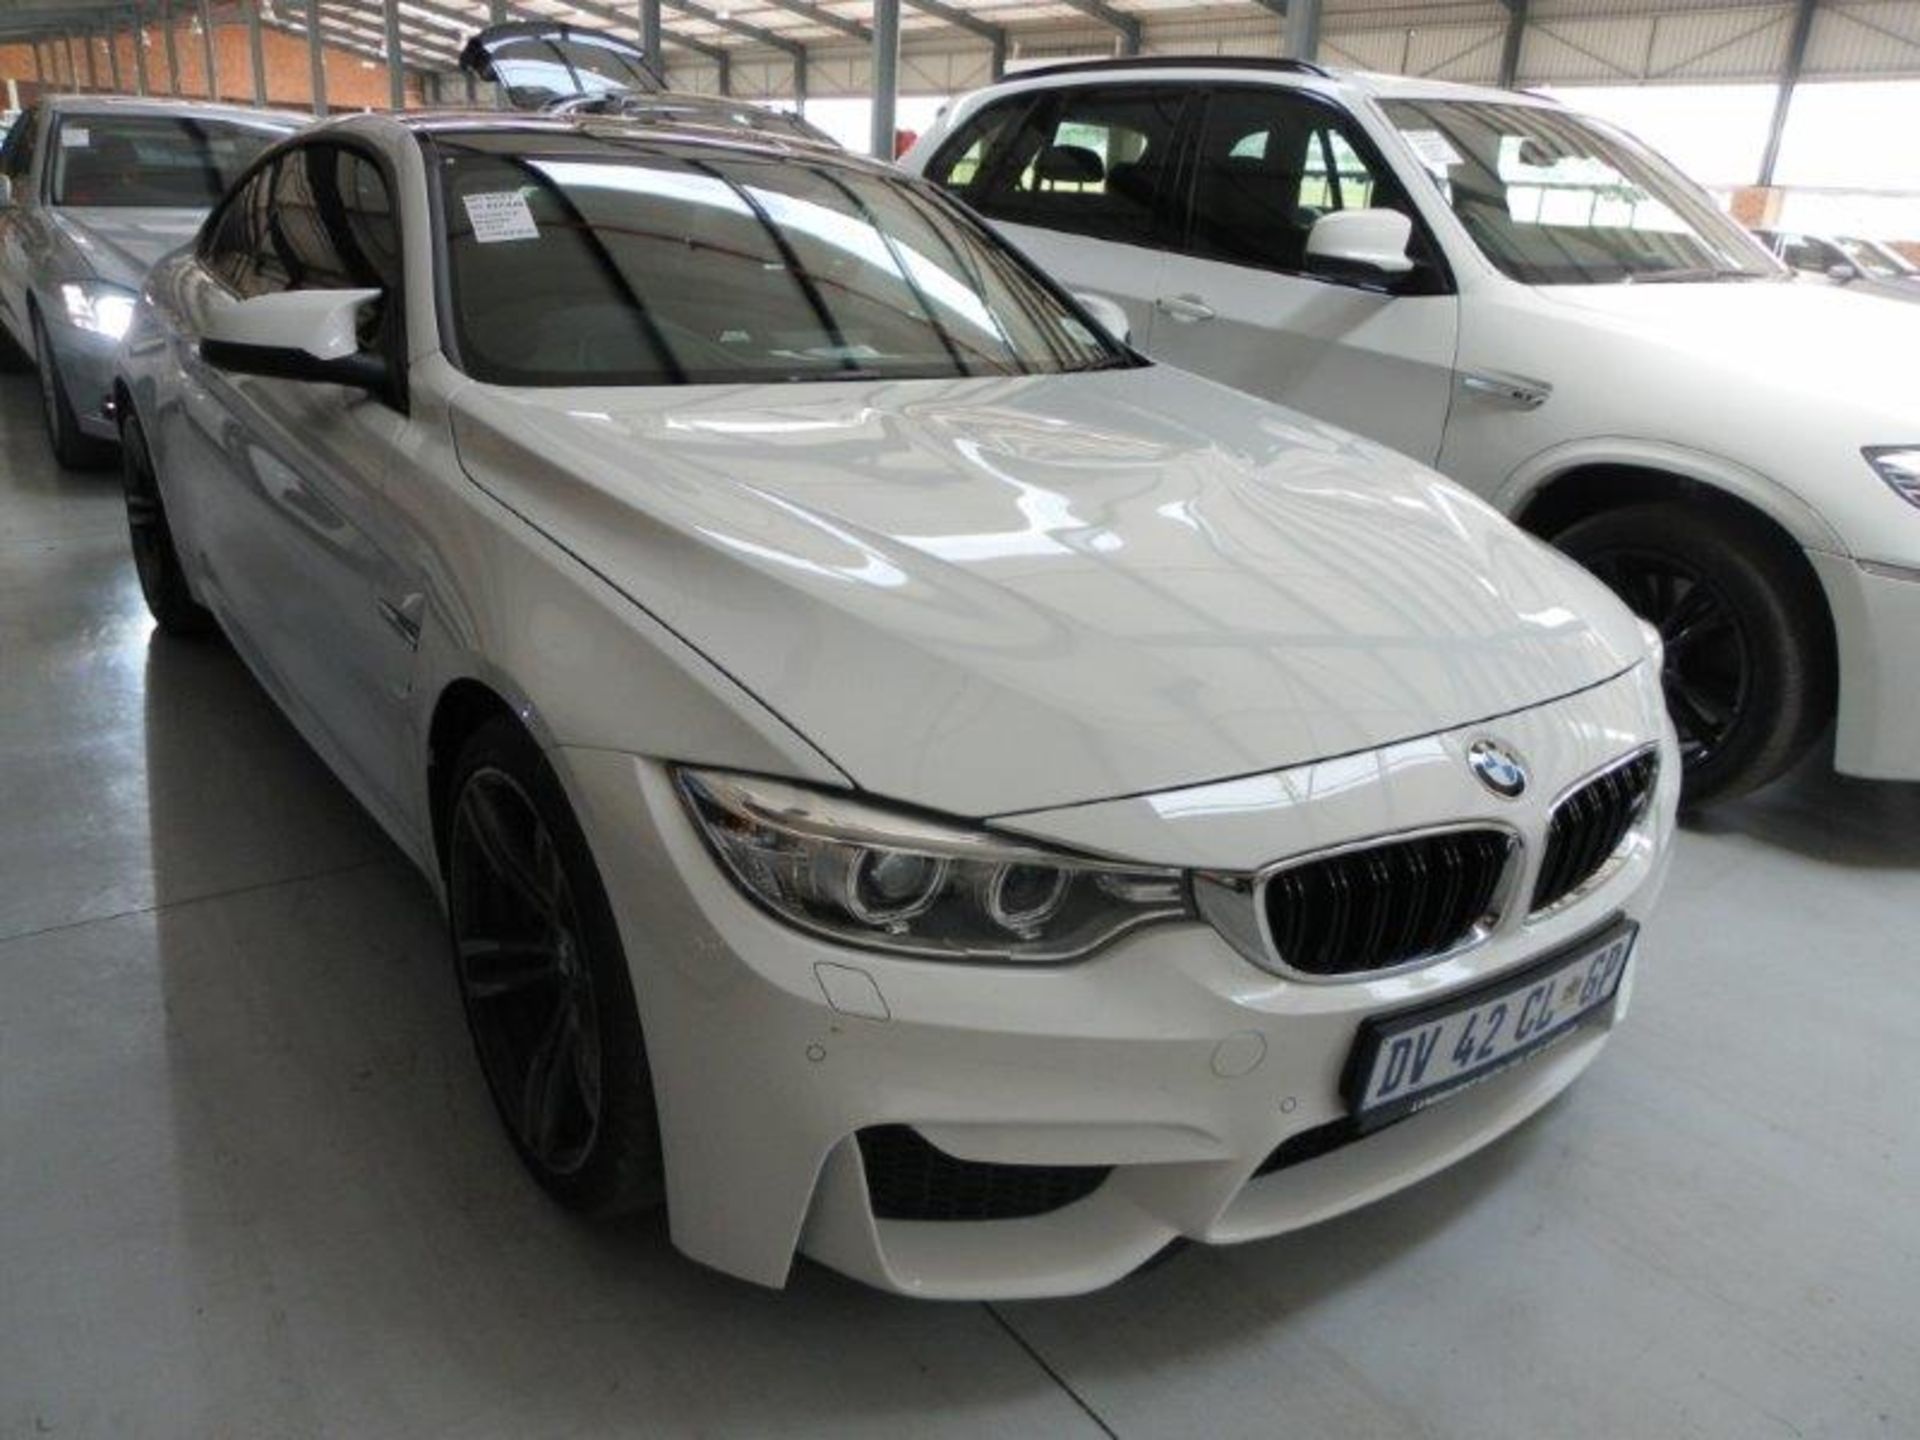 2015 DV42CLGP BMW M4 Coupe Auto (Vin No: WBS3R92050L342819 )(Black Leather, PDC) (White)(1 917 kms)